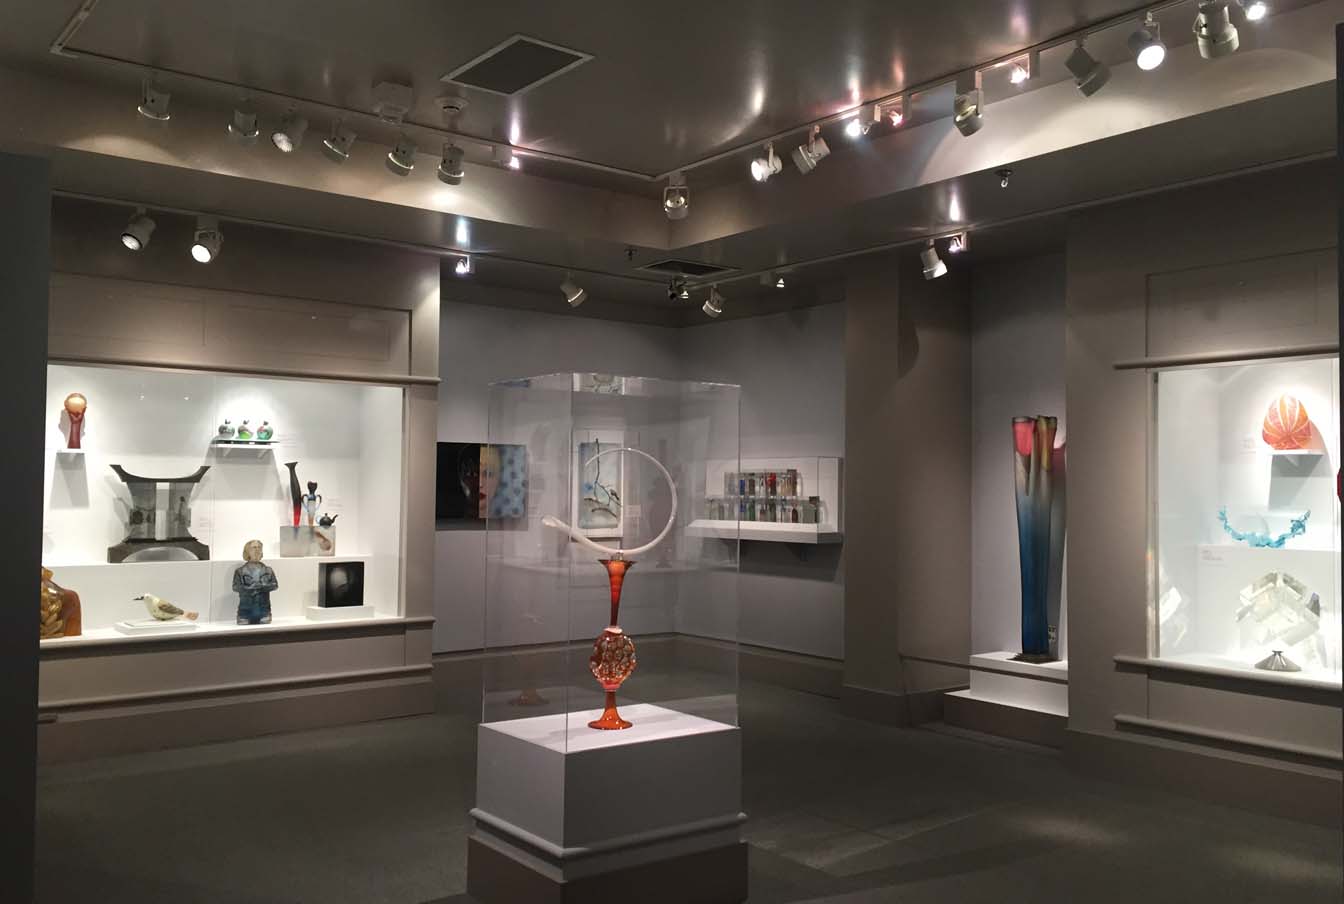 Tonkin Gallery of Studio Glass and Ceramics